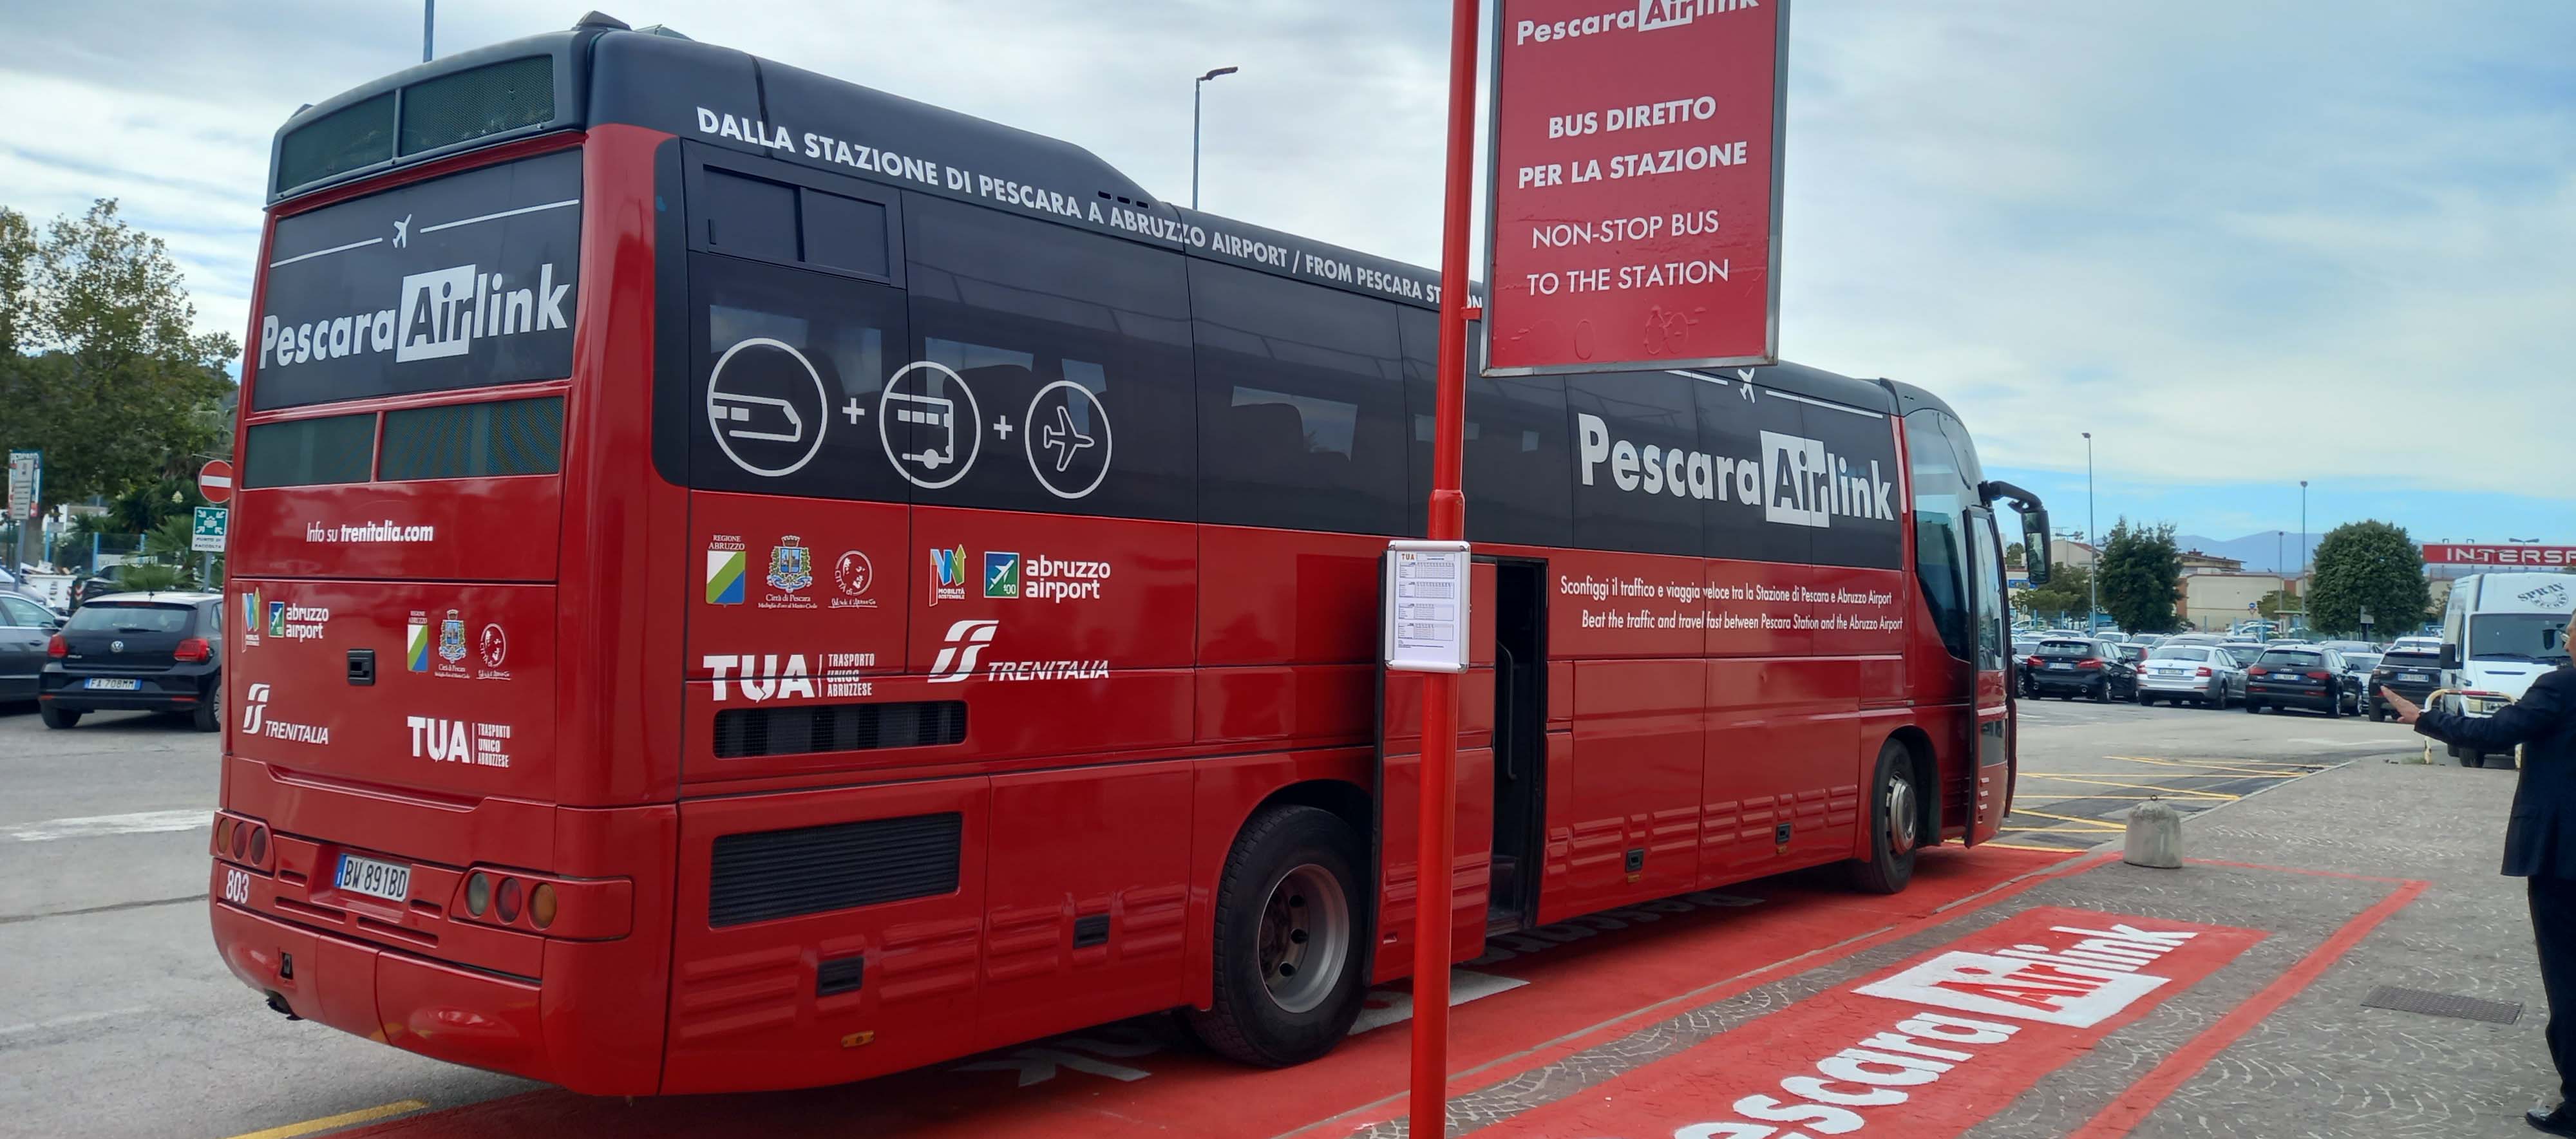 Bus Pescara Airlink